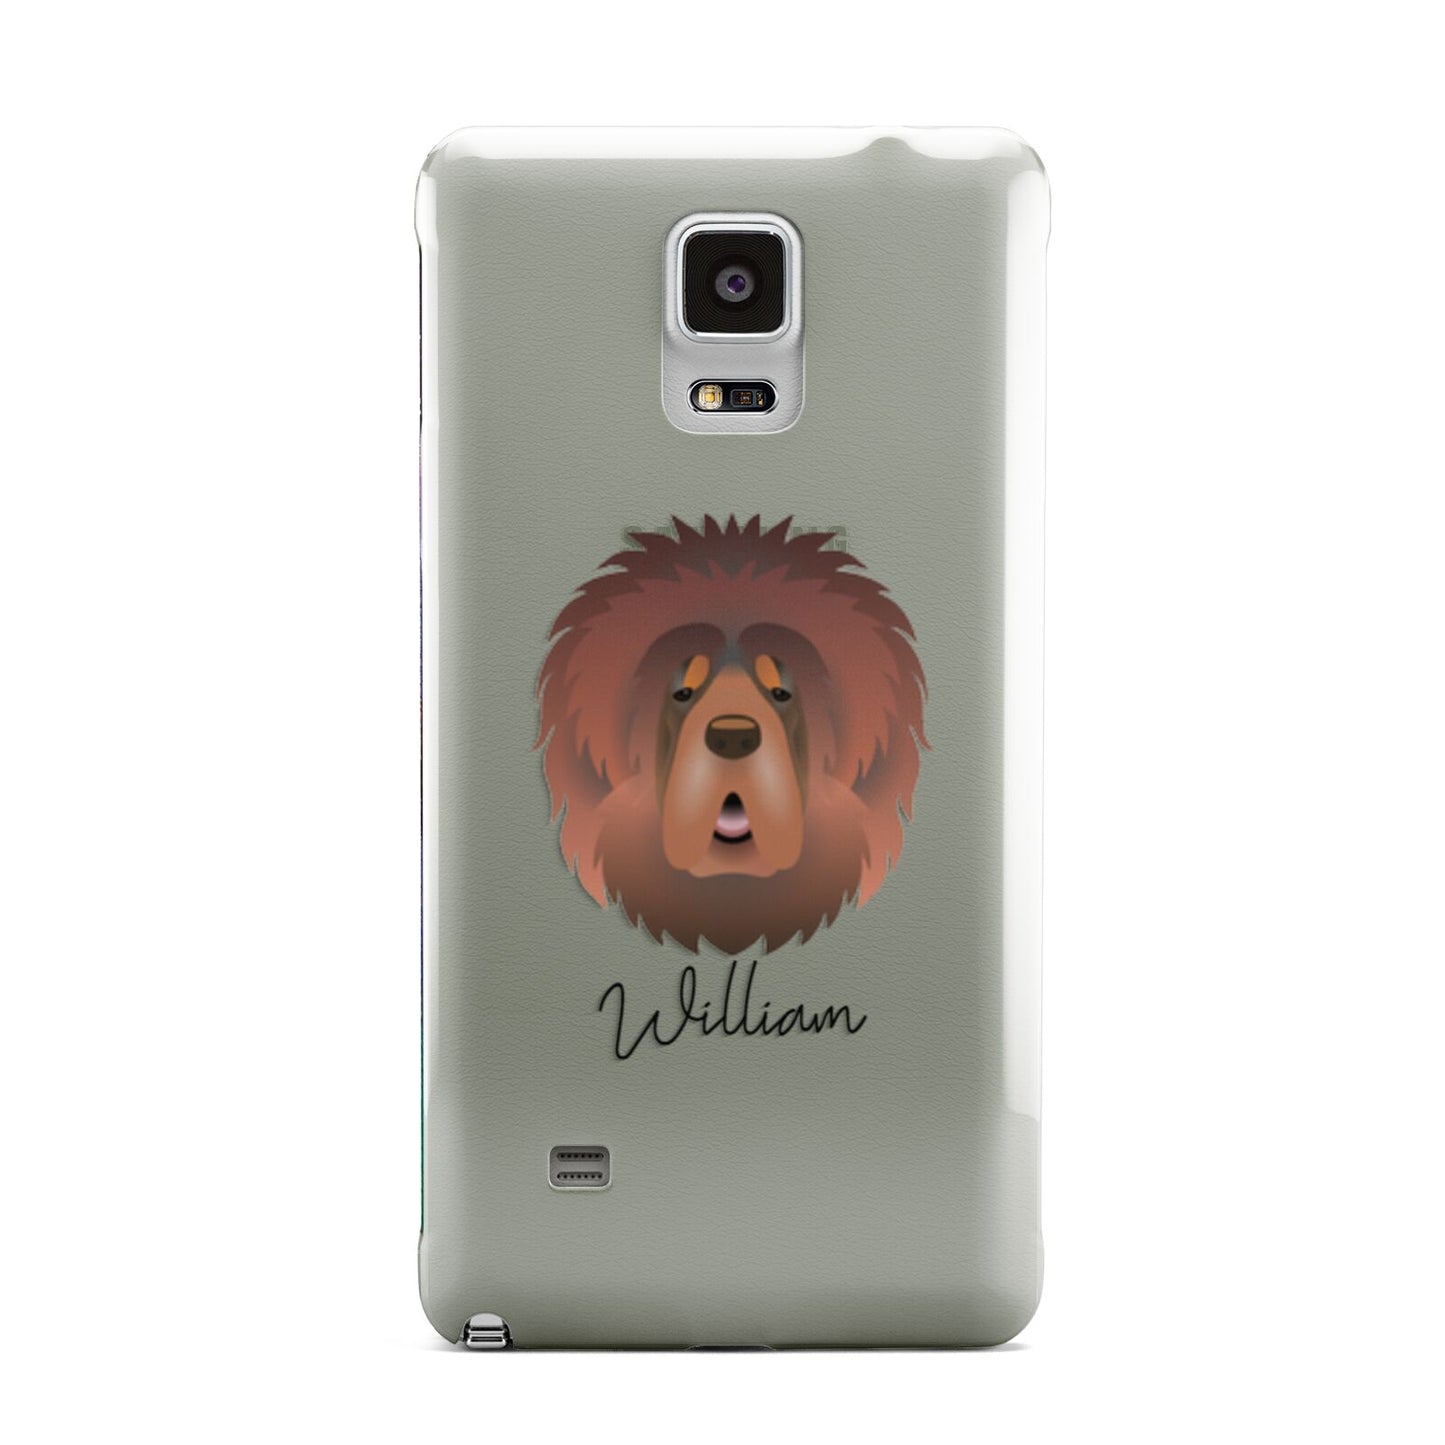 Tibetan Mastiff Personalised Samsung Galaxy Note 4 Case